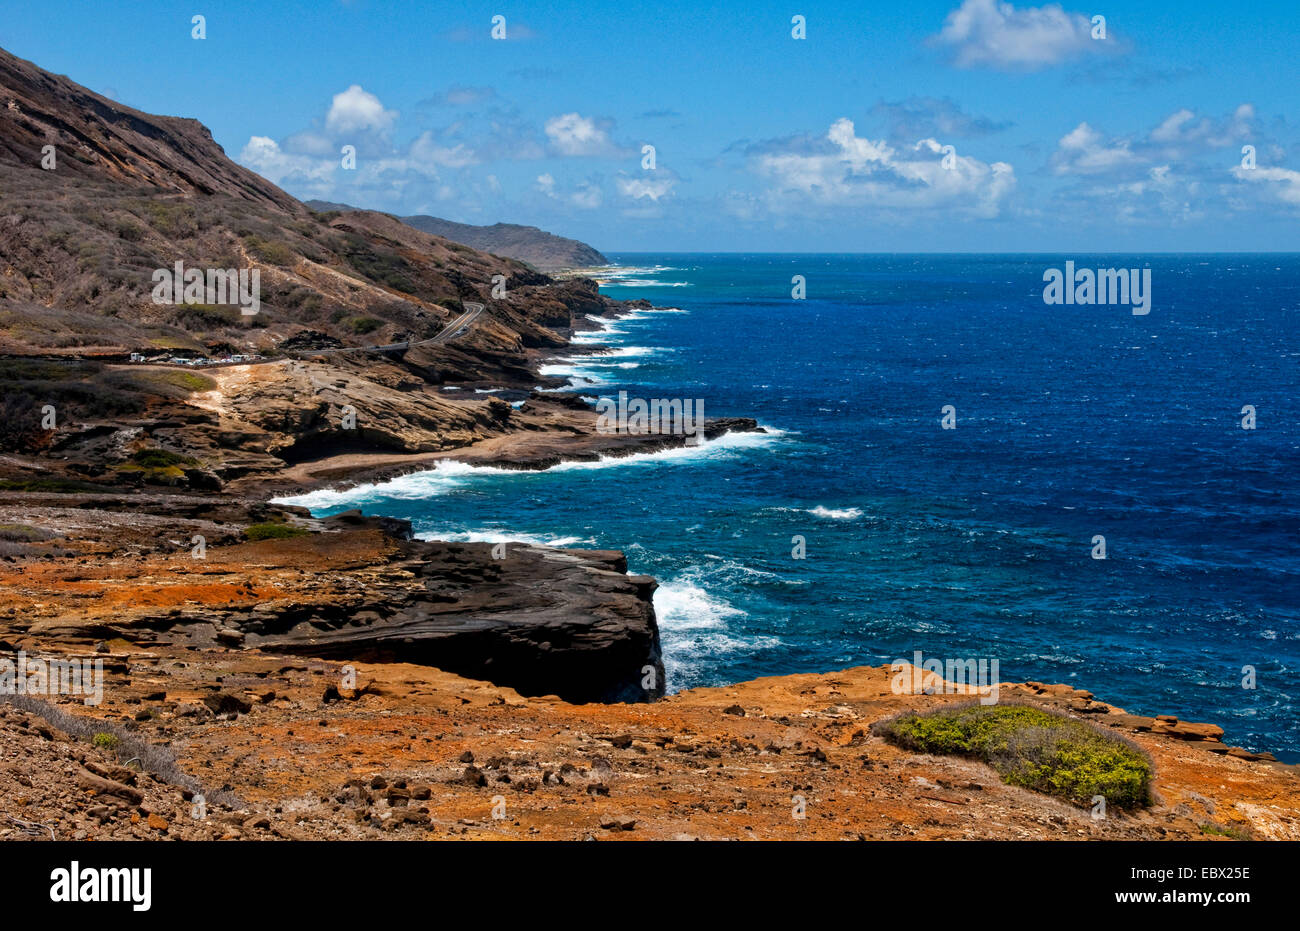 rocks and waves of the Pacific ocean at Koko Head near Hanauma Bay, USA, Hawaii, Honolulu Stock Photo